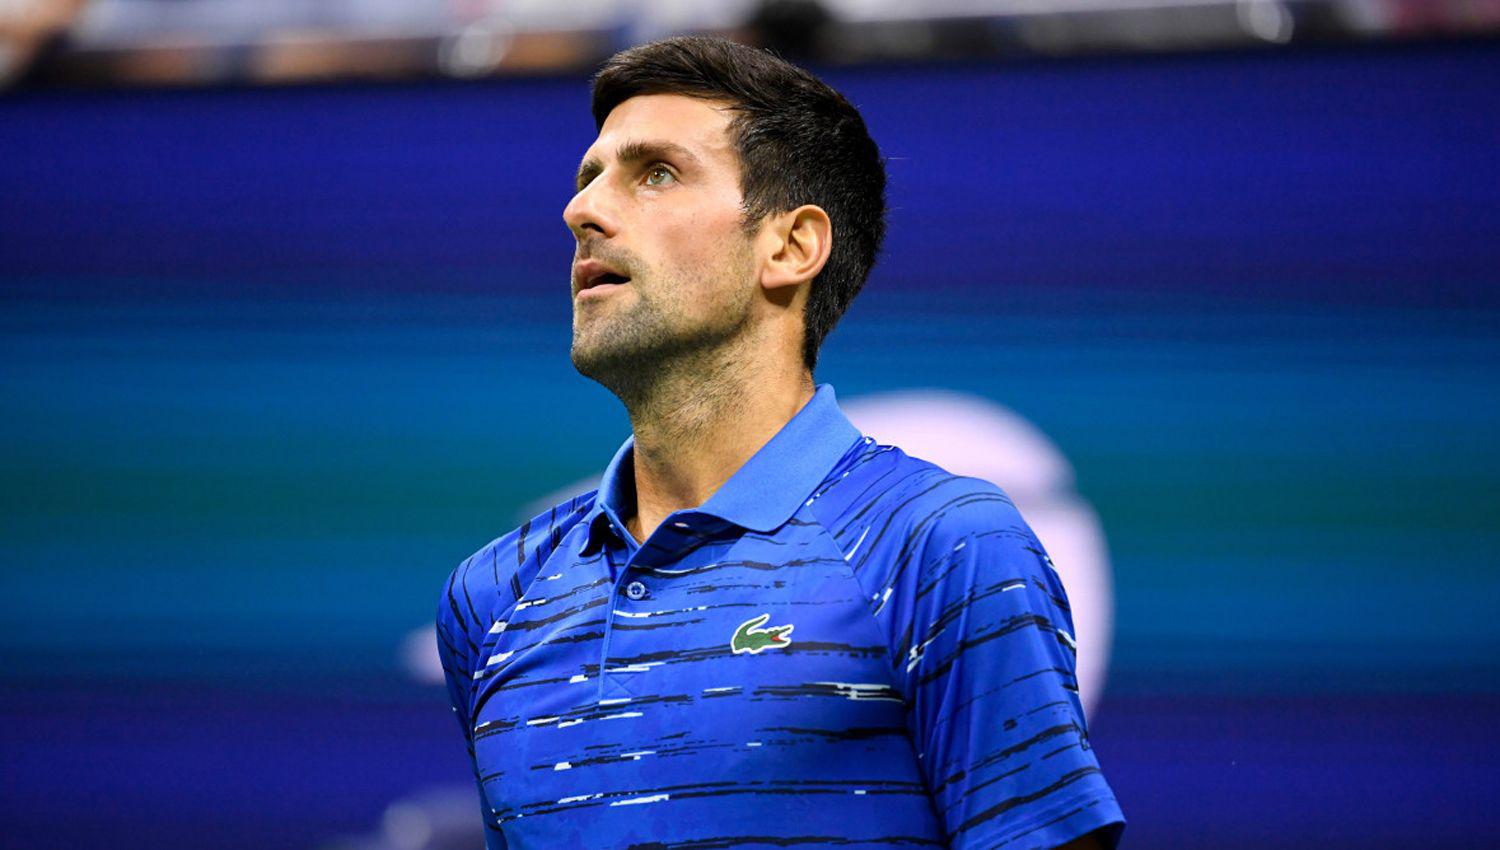 Tras el torneo de tenis que organizoacute Novak Djokovic dio positivo de coronavirus